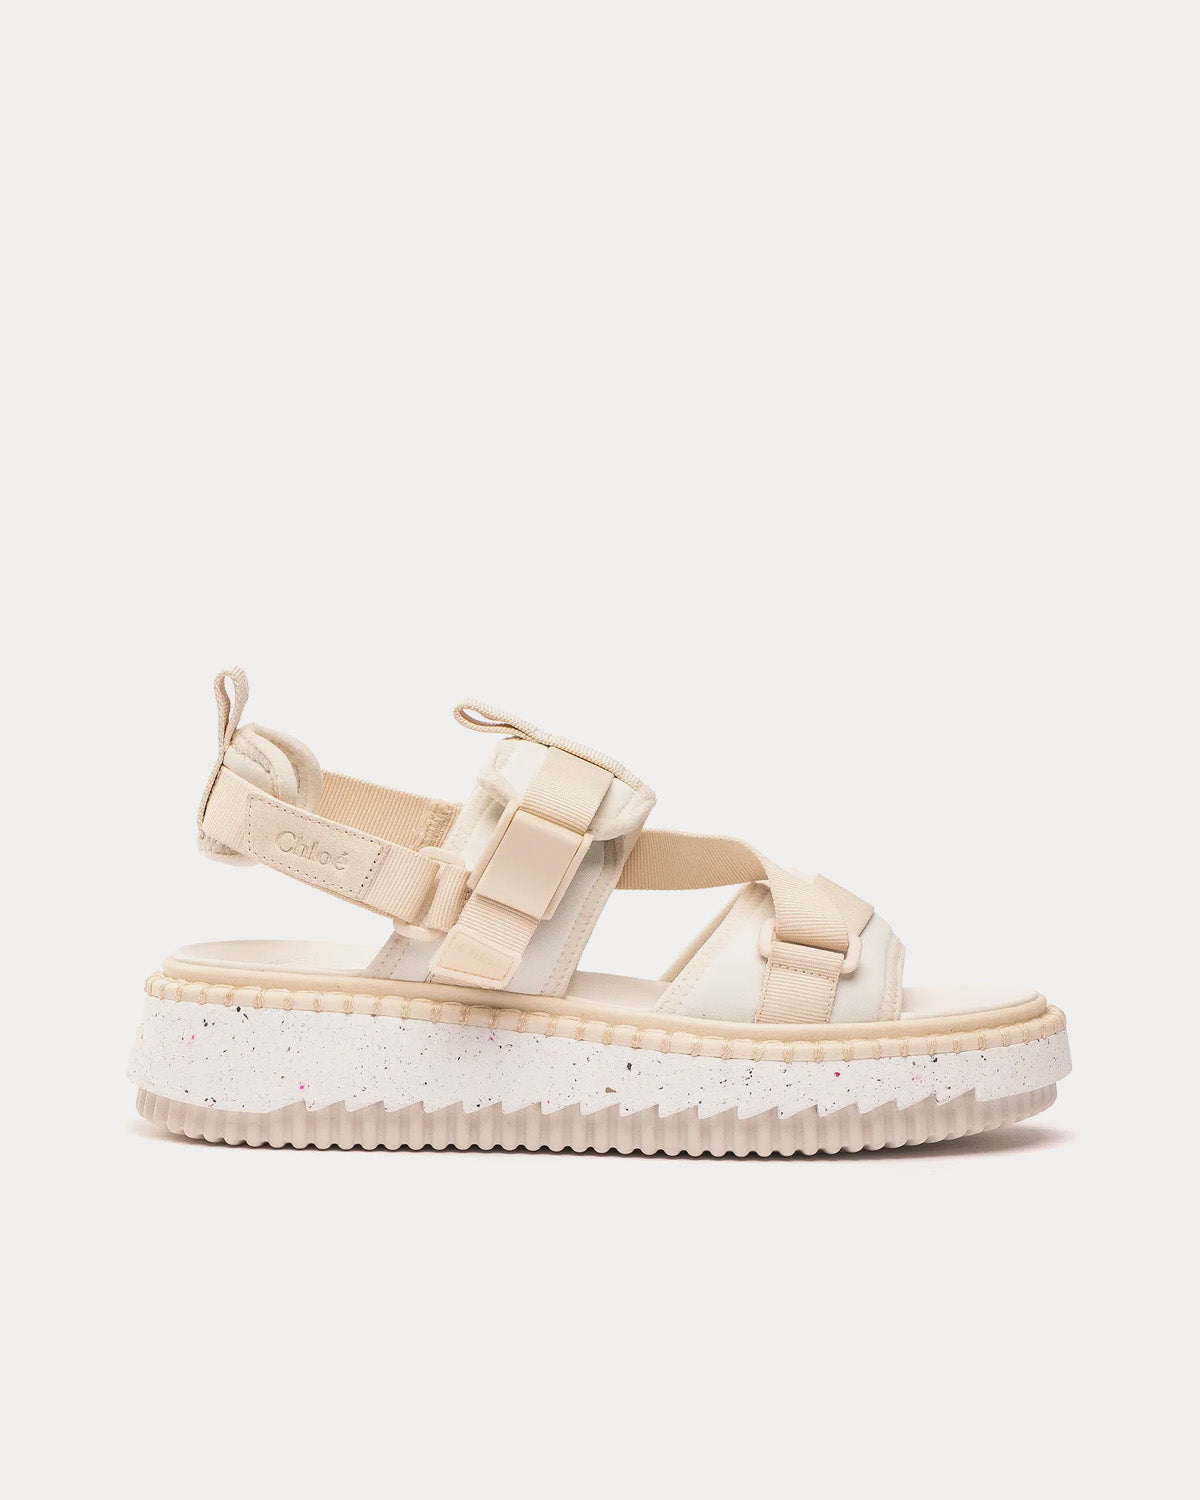 Chloé - Lilli Flat Nomad White Sandals